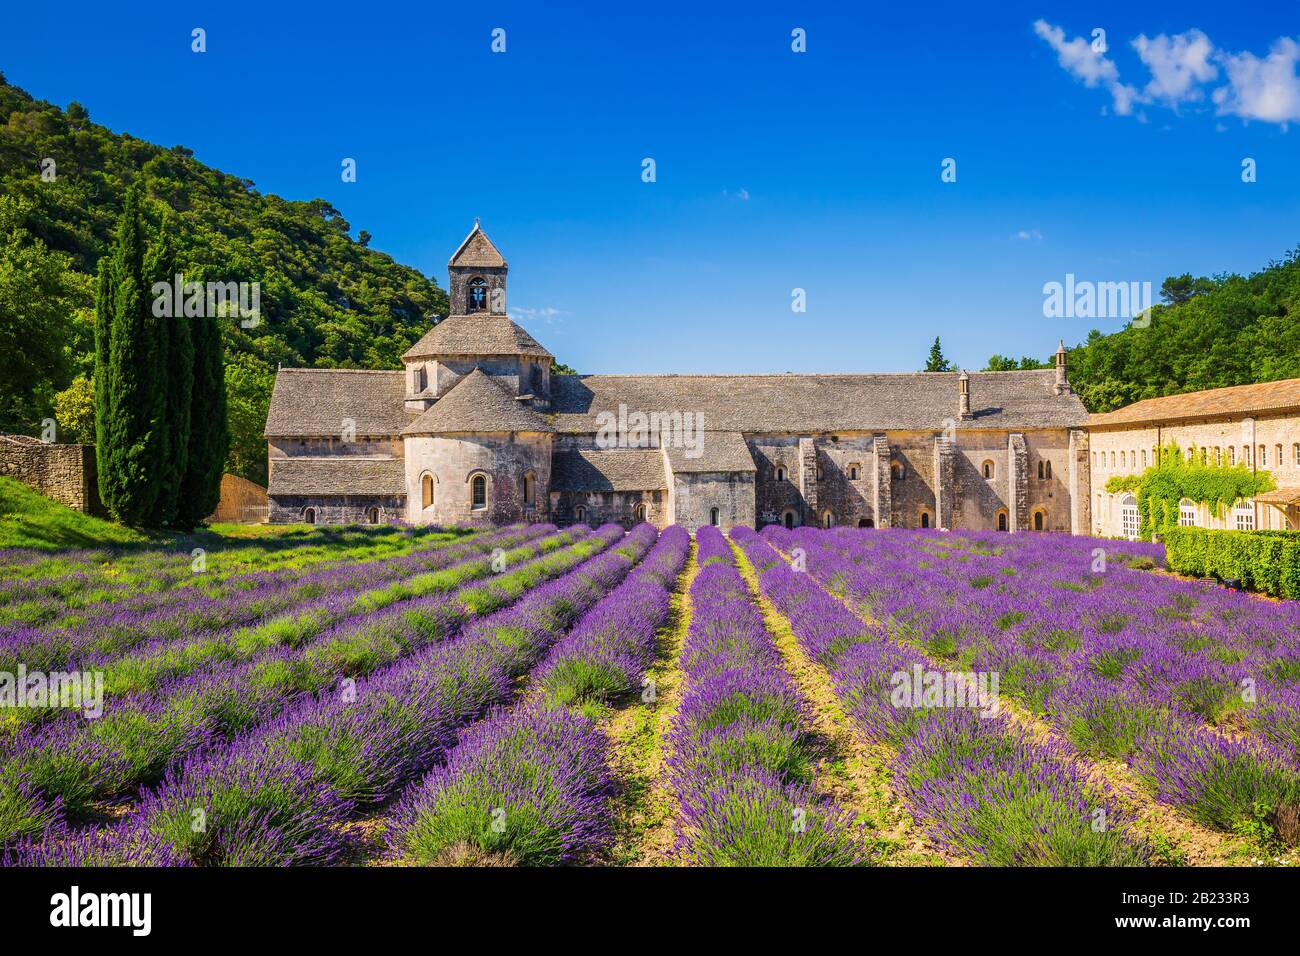 Provence, Frankreich. Blühende Lila Lavendelfelder in der Senanque Kloster. Stockfoto